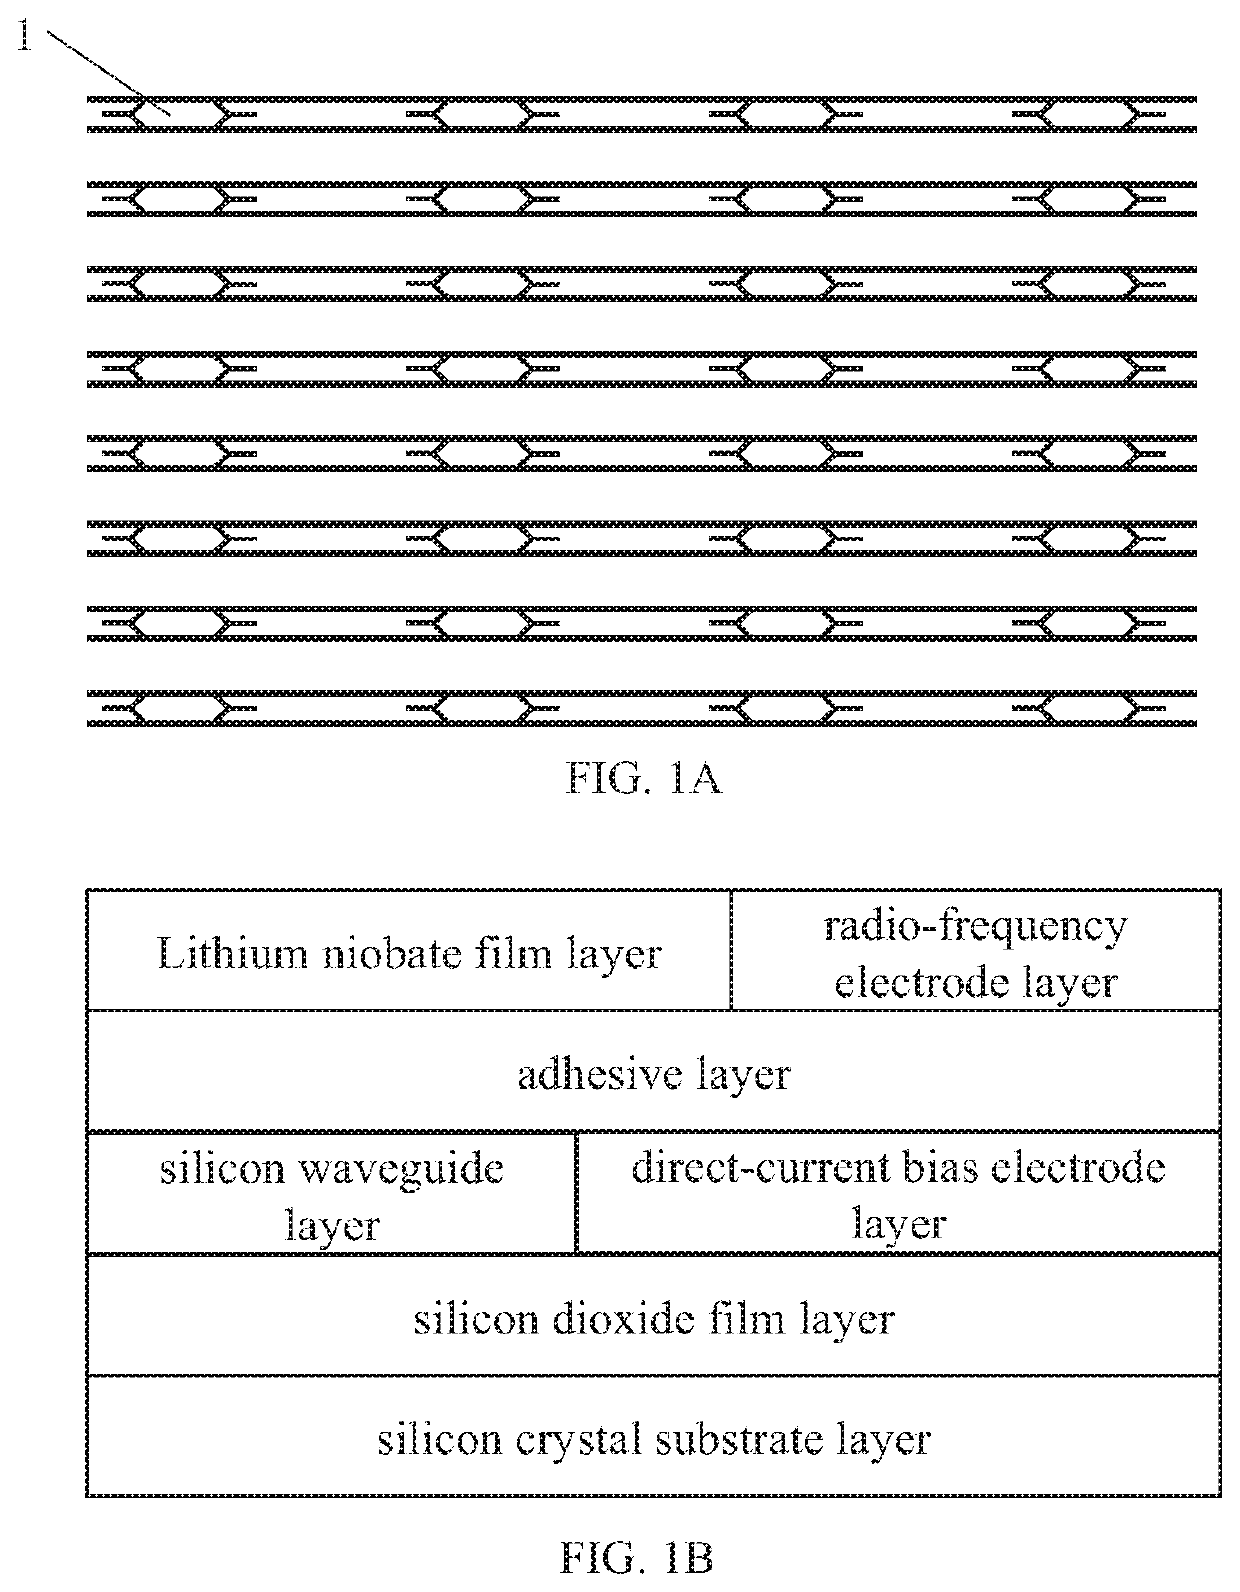 Silicon-based lithium niobate film electro-optic modulator array and integration method thereof